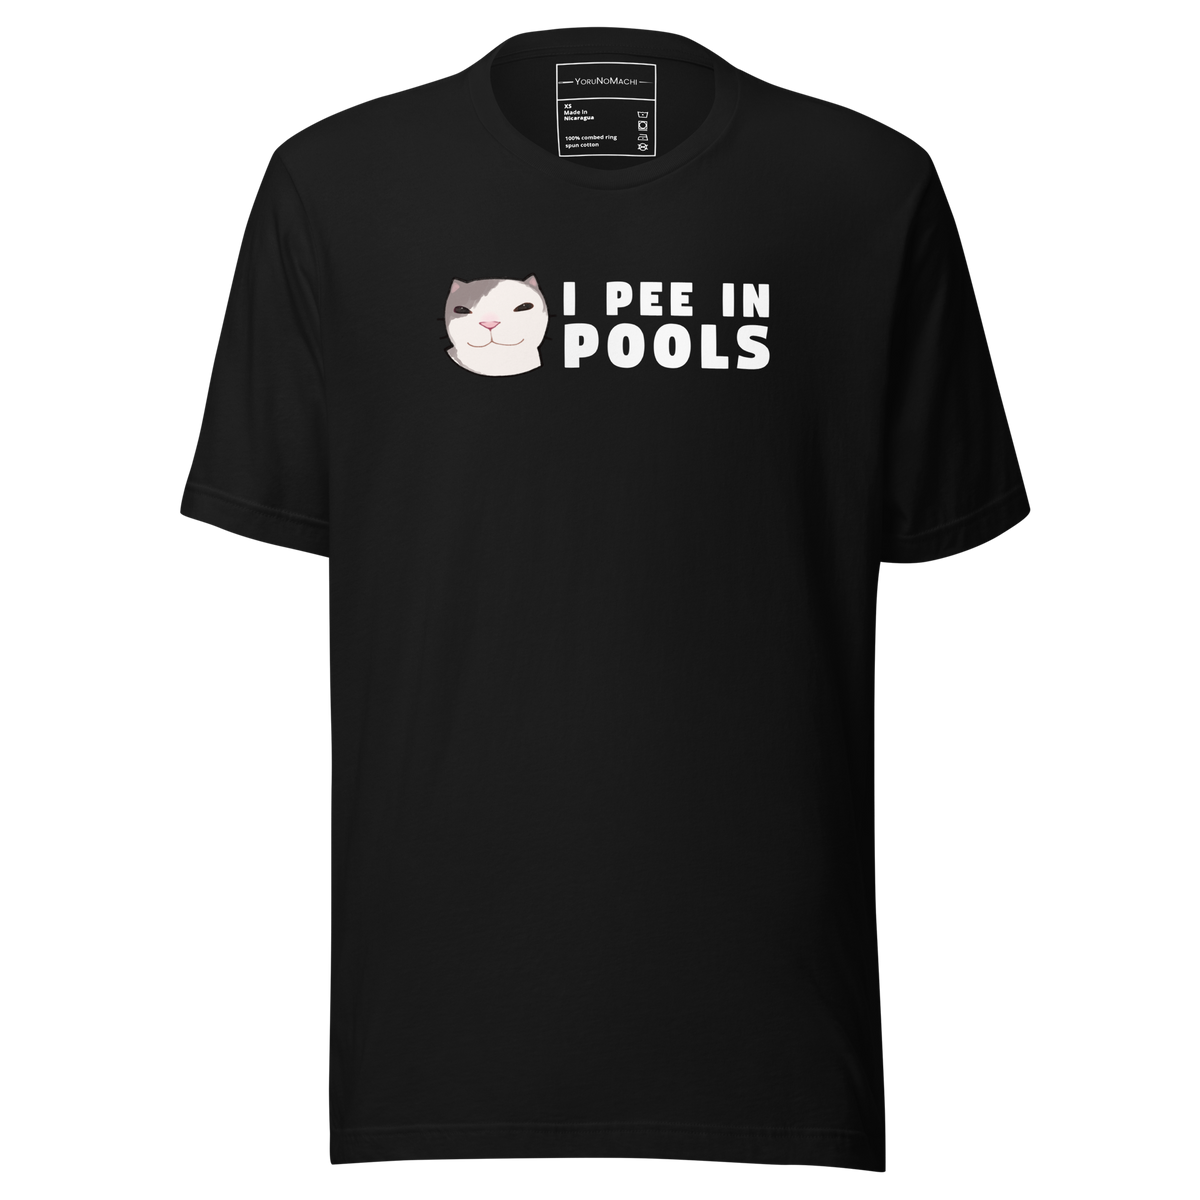 I Pee in Pools Shirt